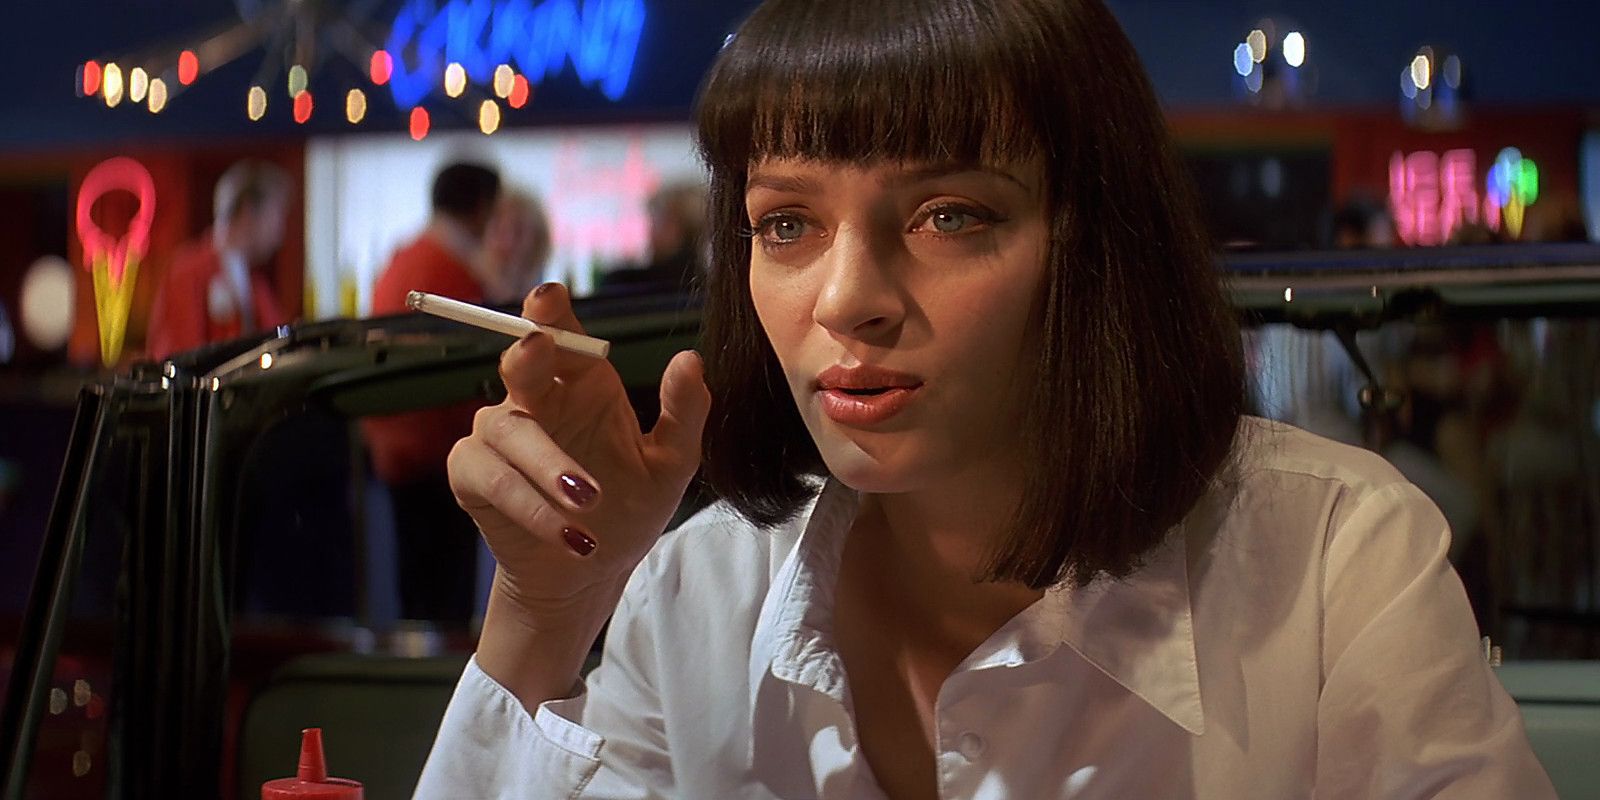 Mia Wallace smokes a cigarette in a restaurant in Pulp Fiction